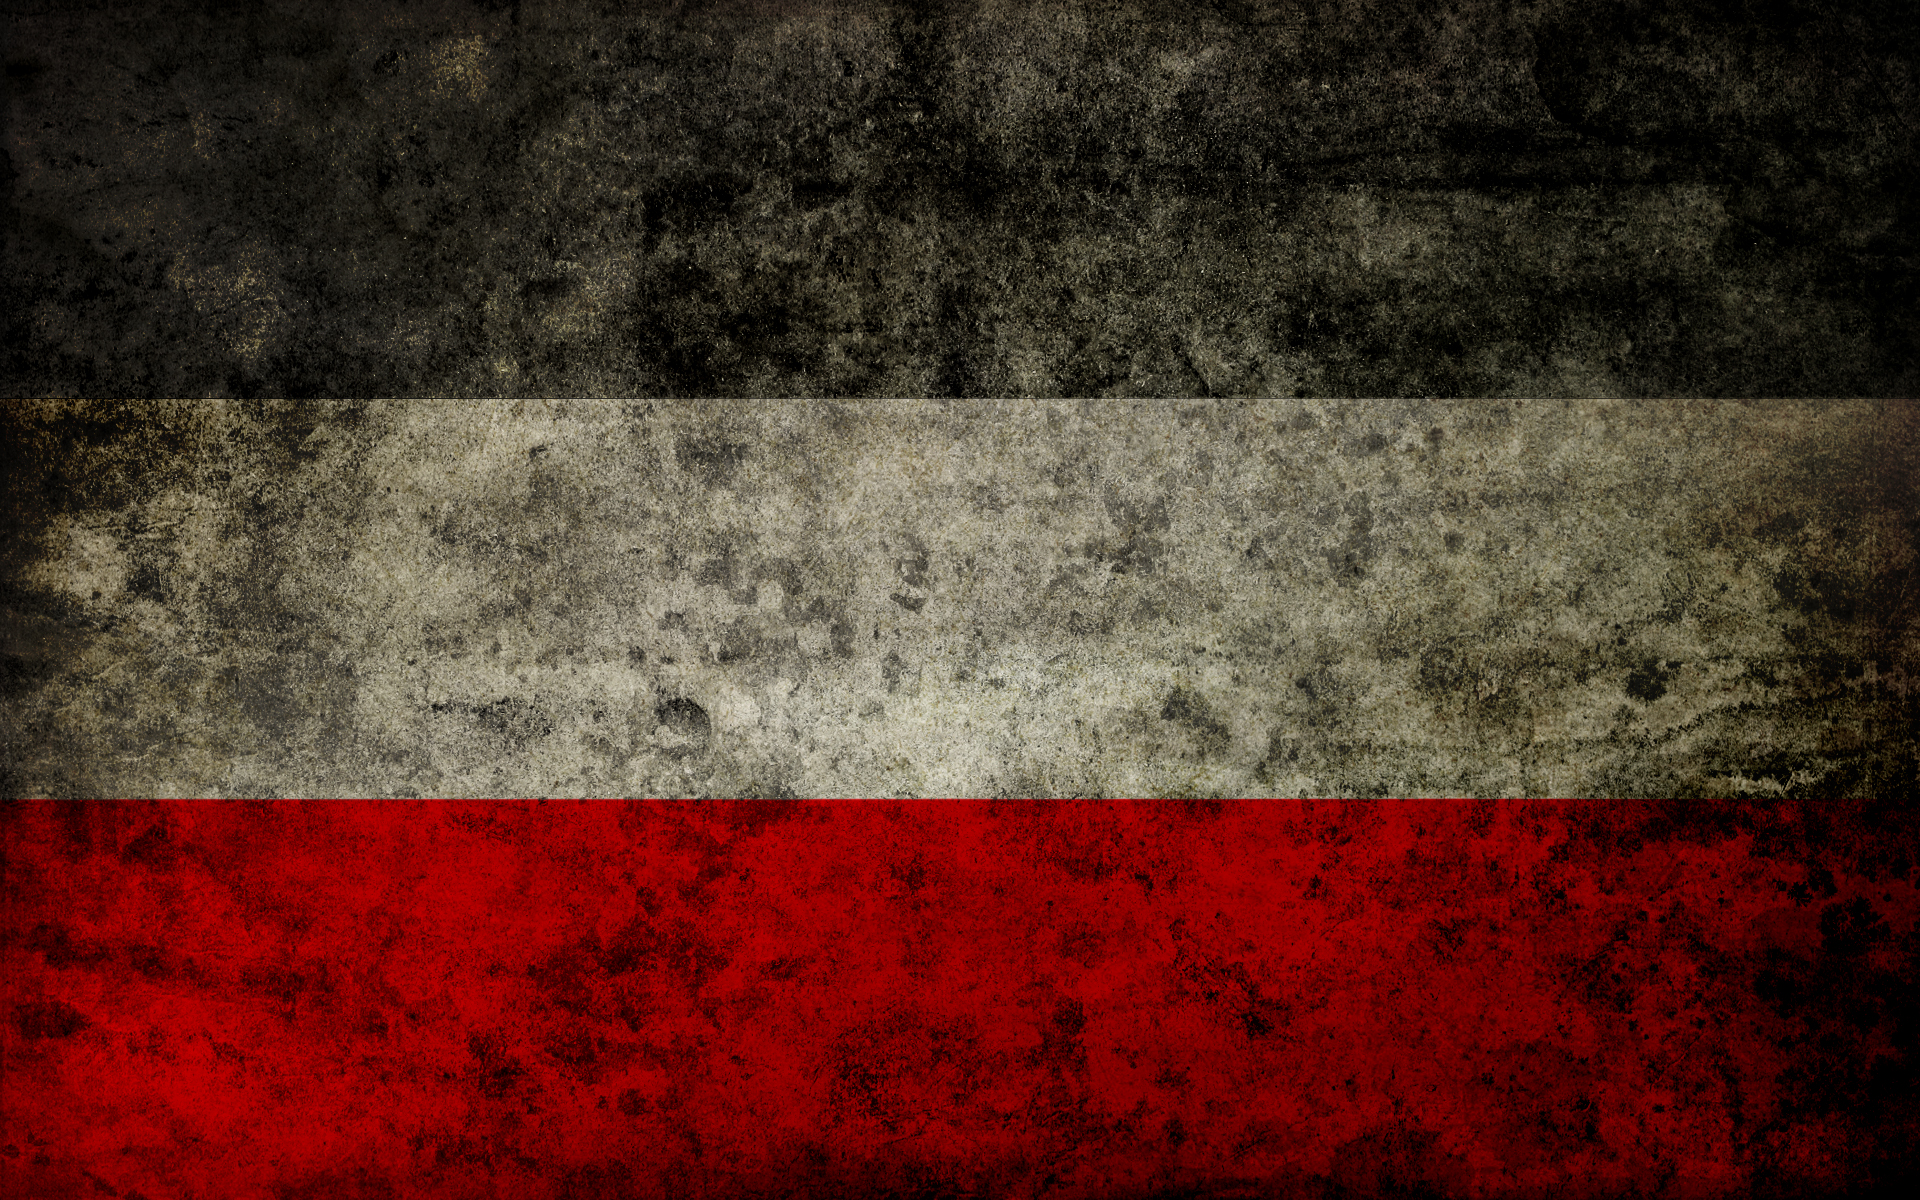 Germany, grunge, flags - desktop wallpaper